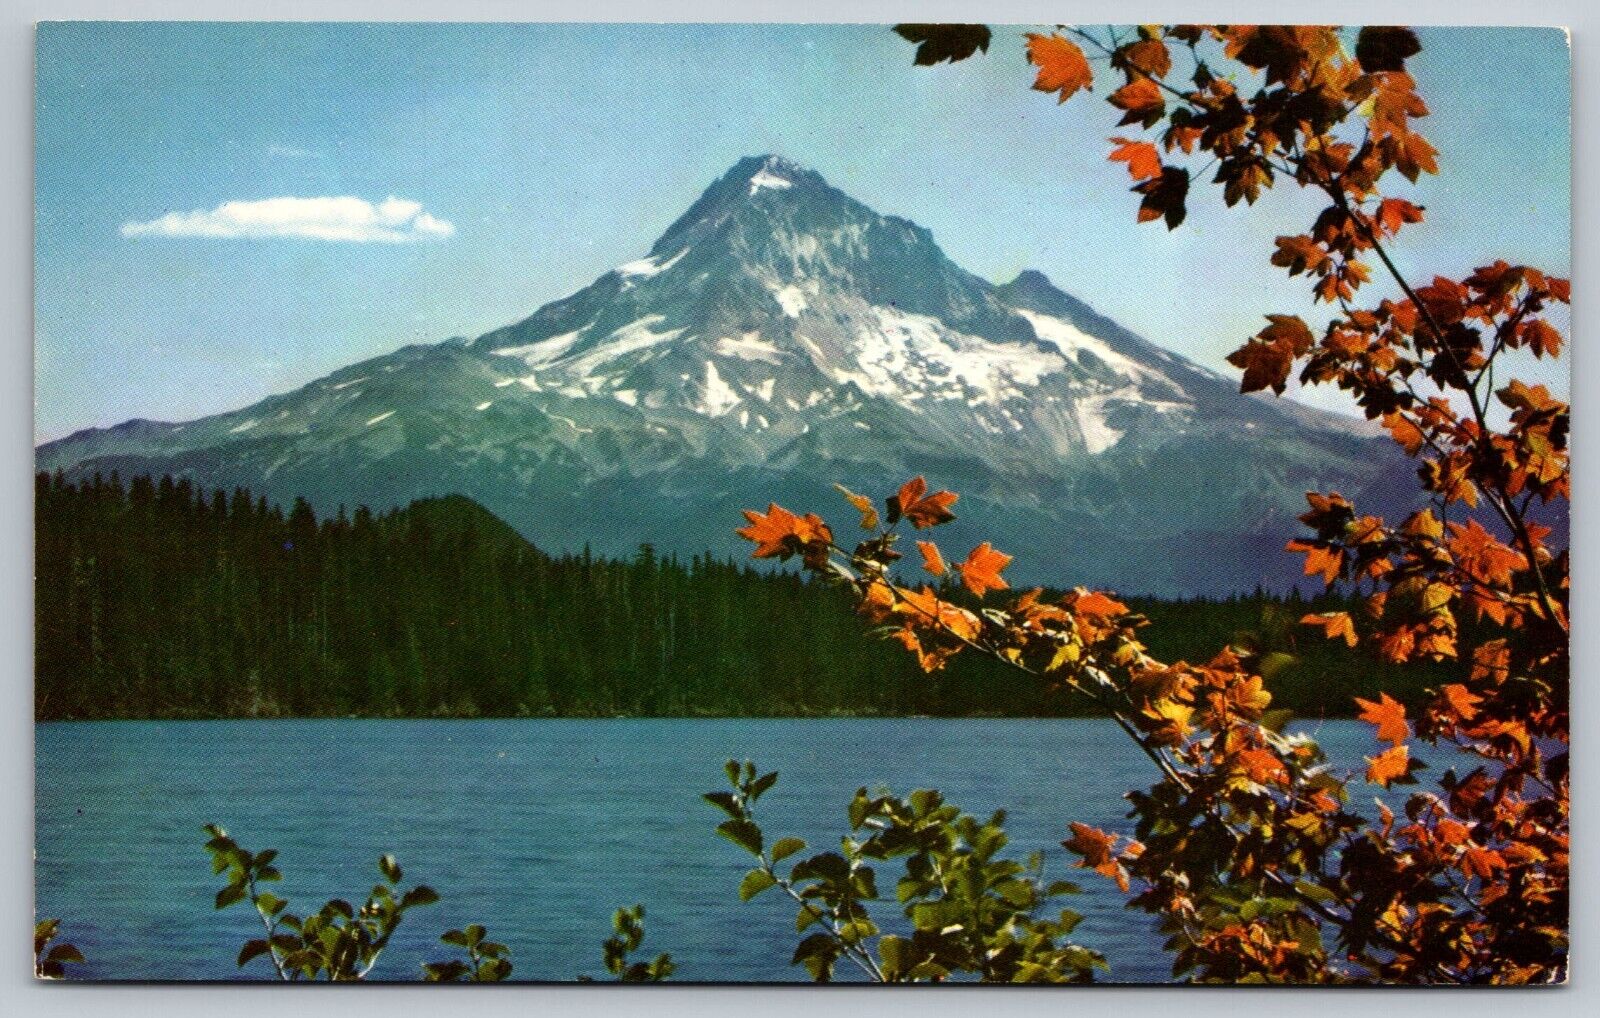 Mt. Hood Scenic View Snowcapped Oregon OR Vintage Postcard